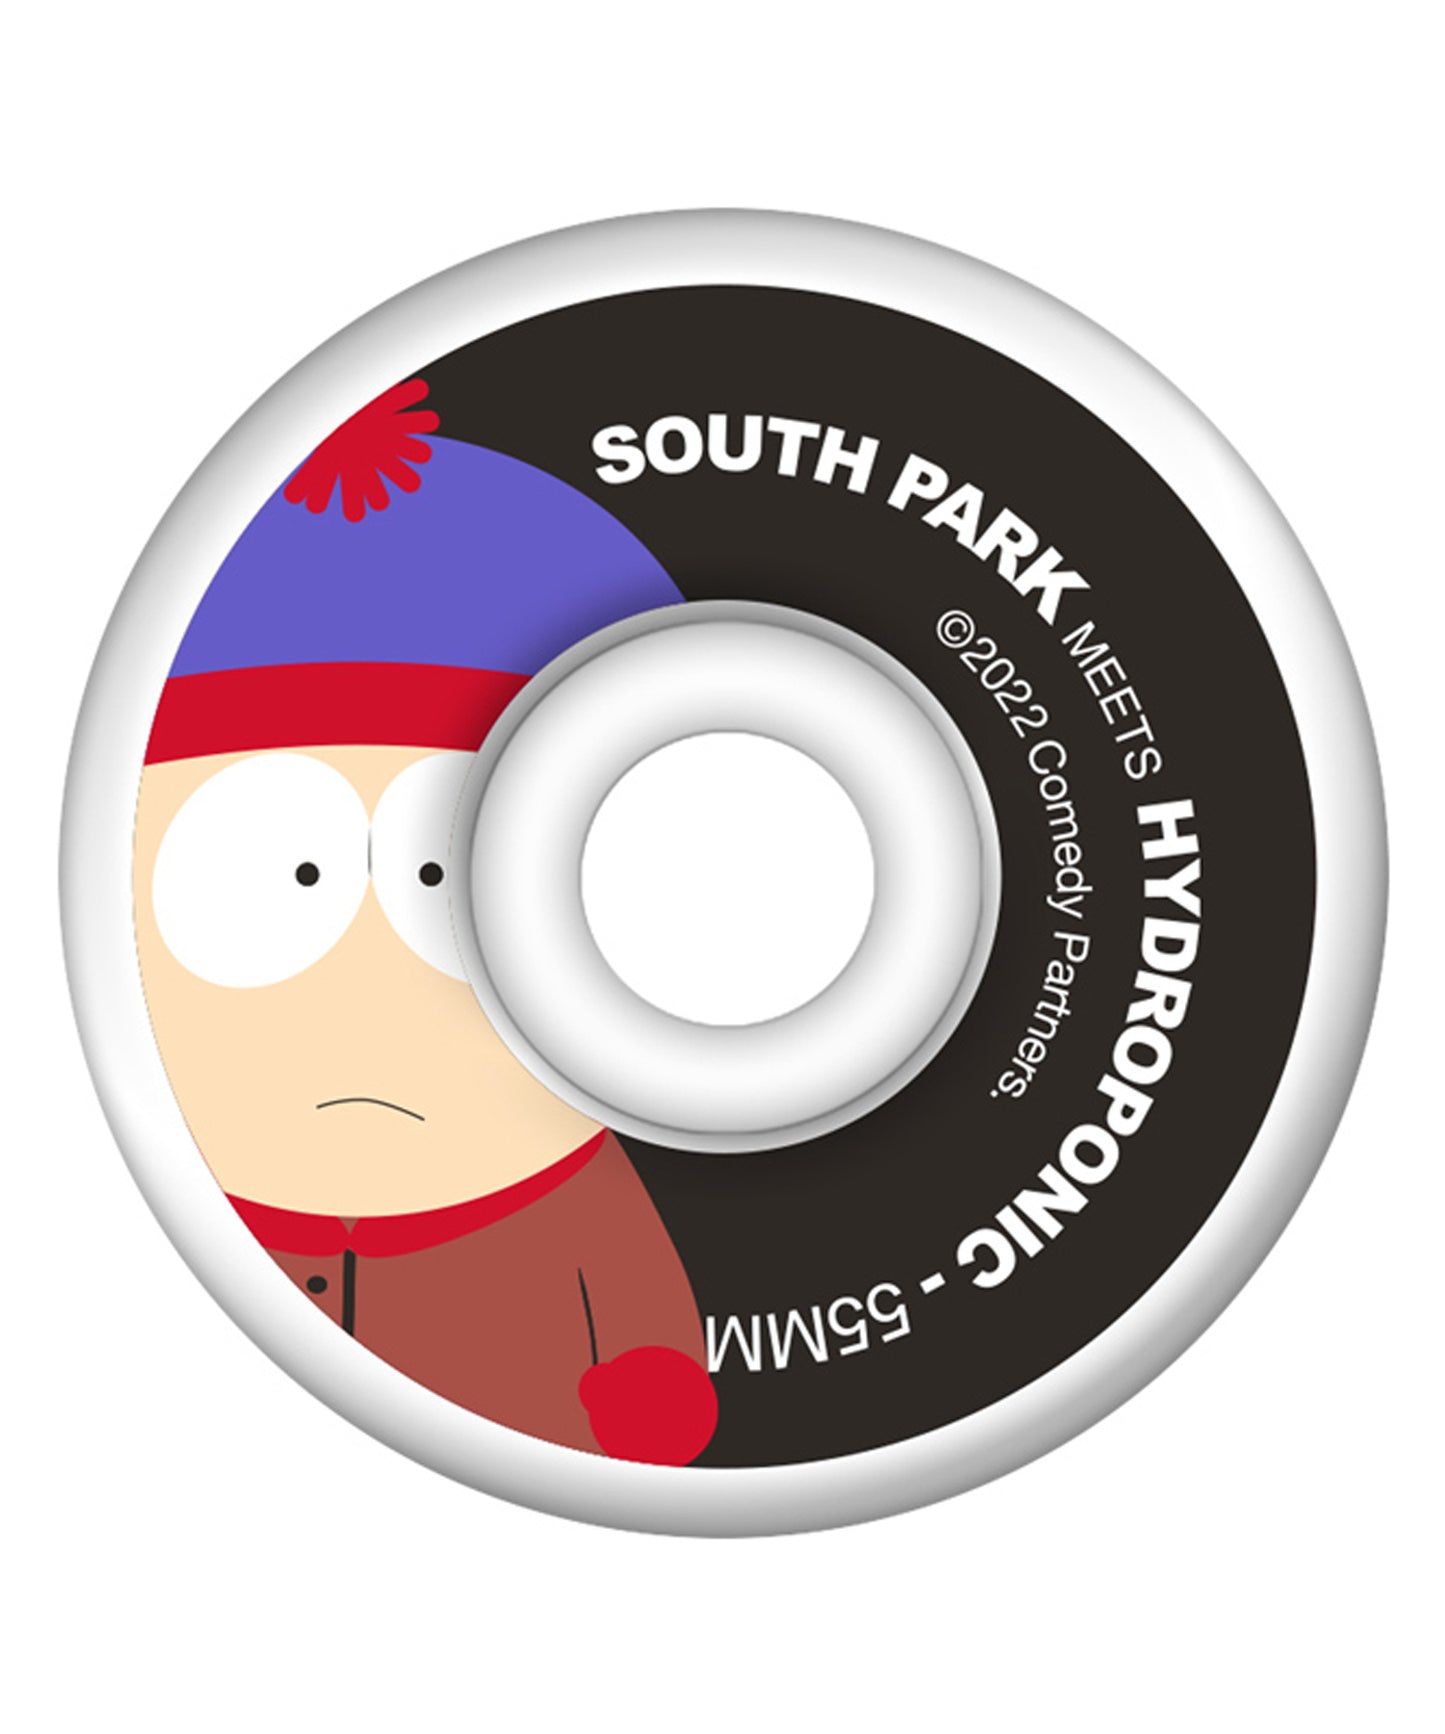 Hydroponic-ruedas de skate 53mm colleccion Stan South Park